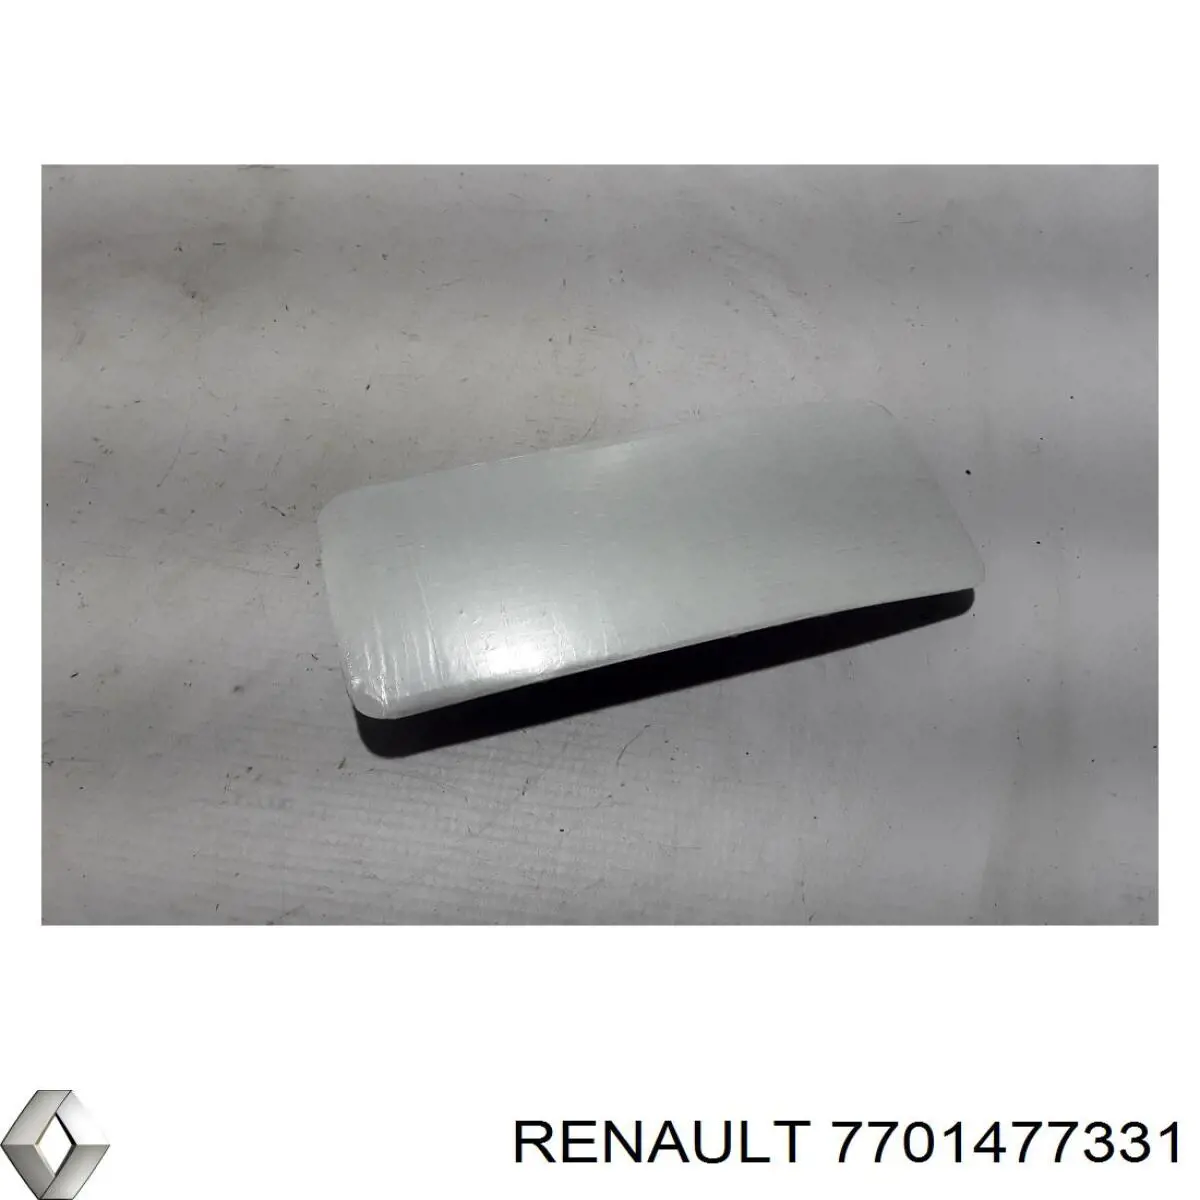 7701477331 Renault (RVI) вкладыши коленвала коренные, комплект, стандарт (std)